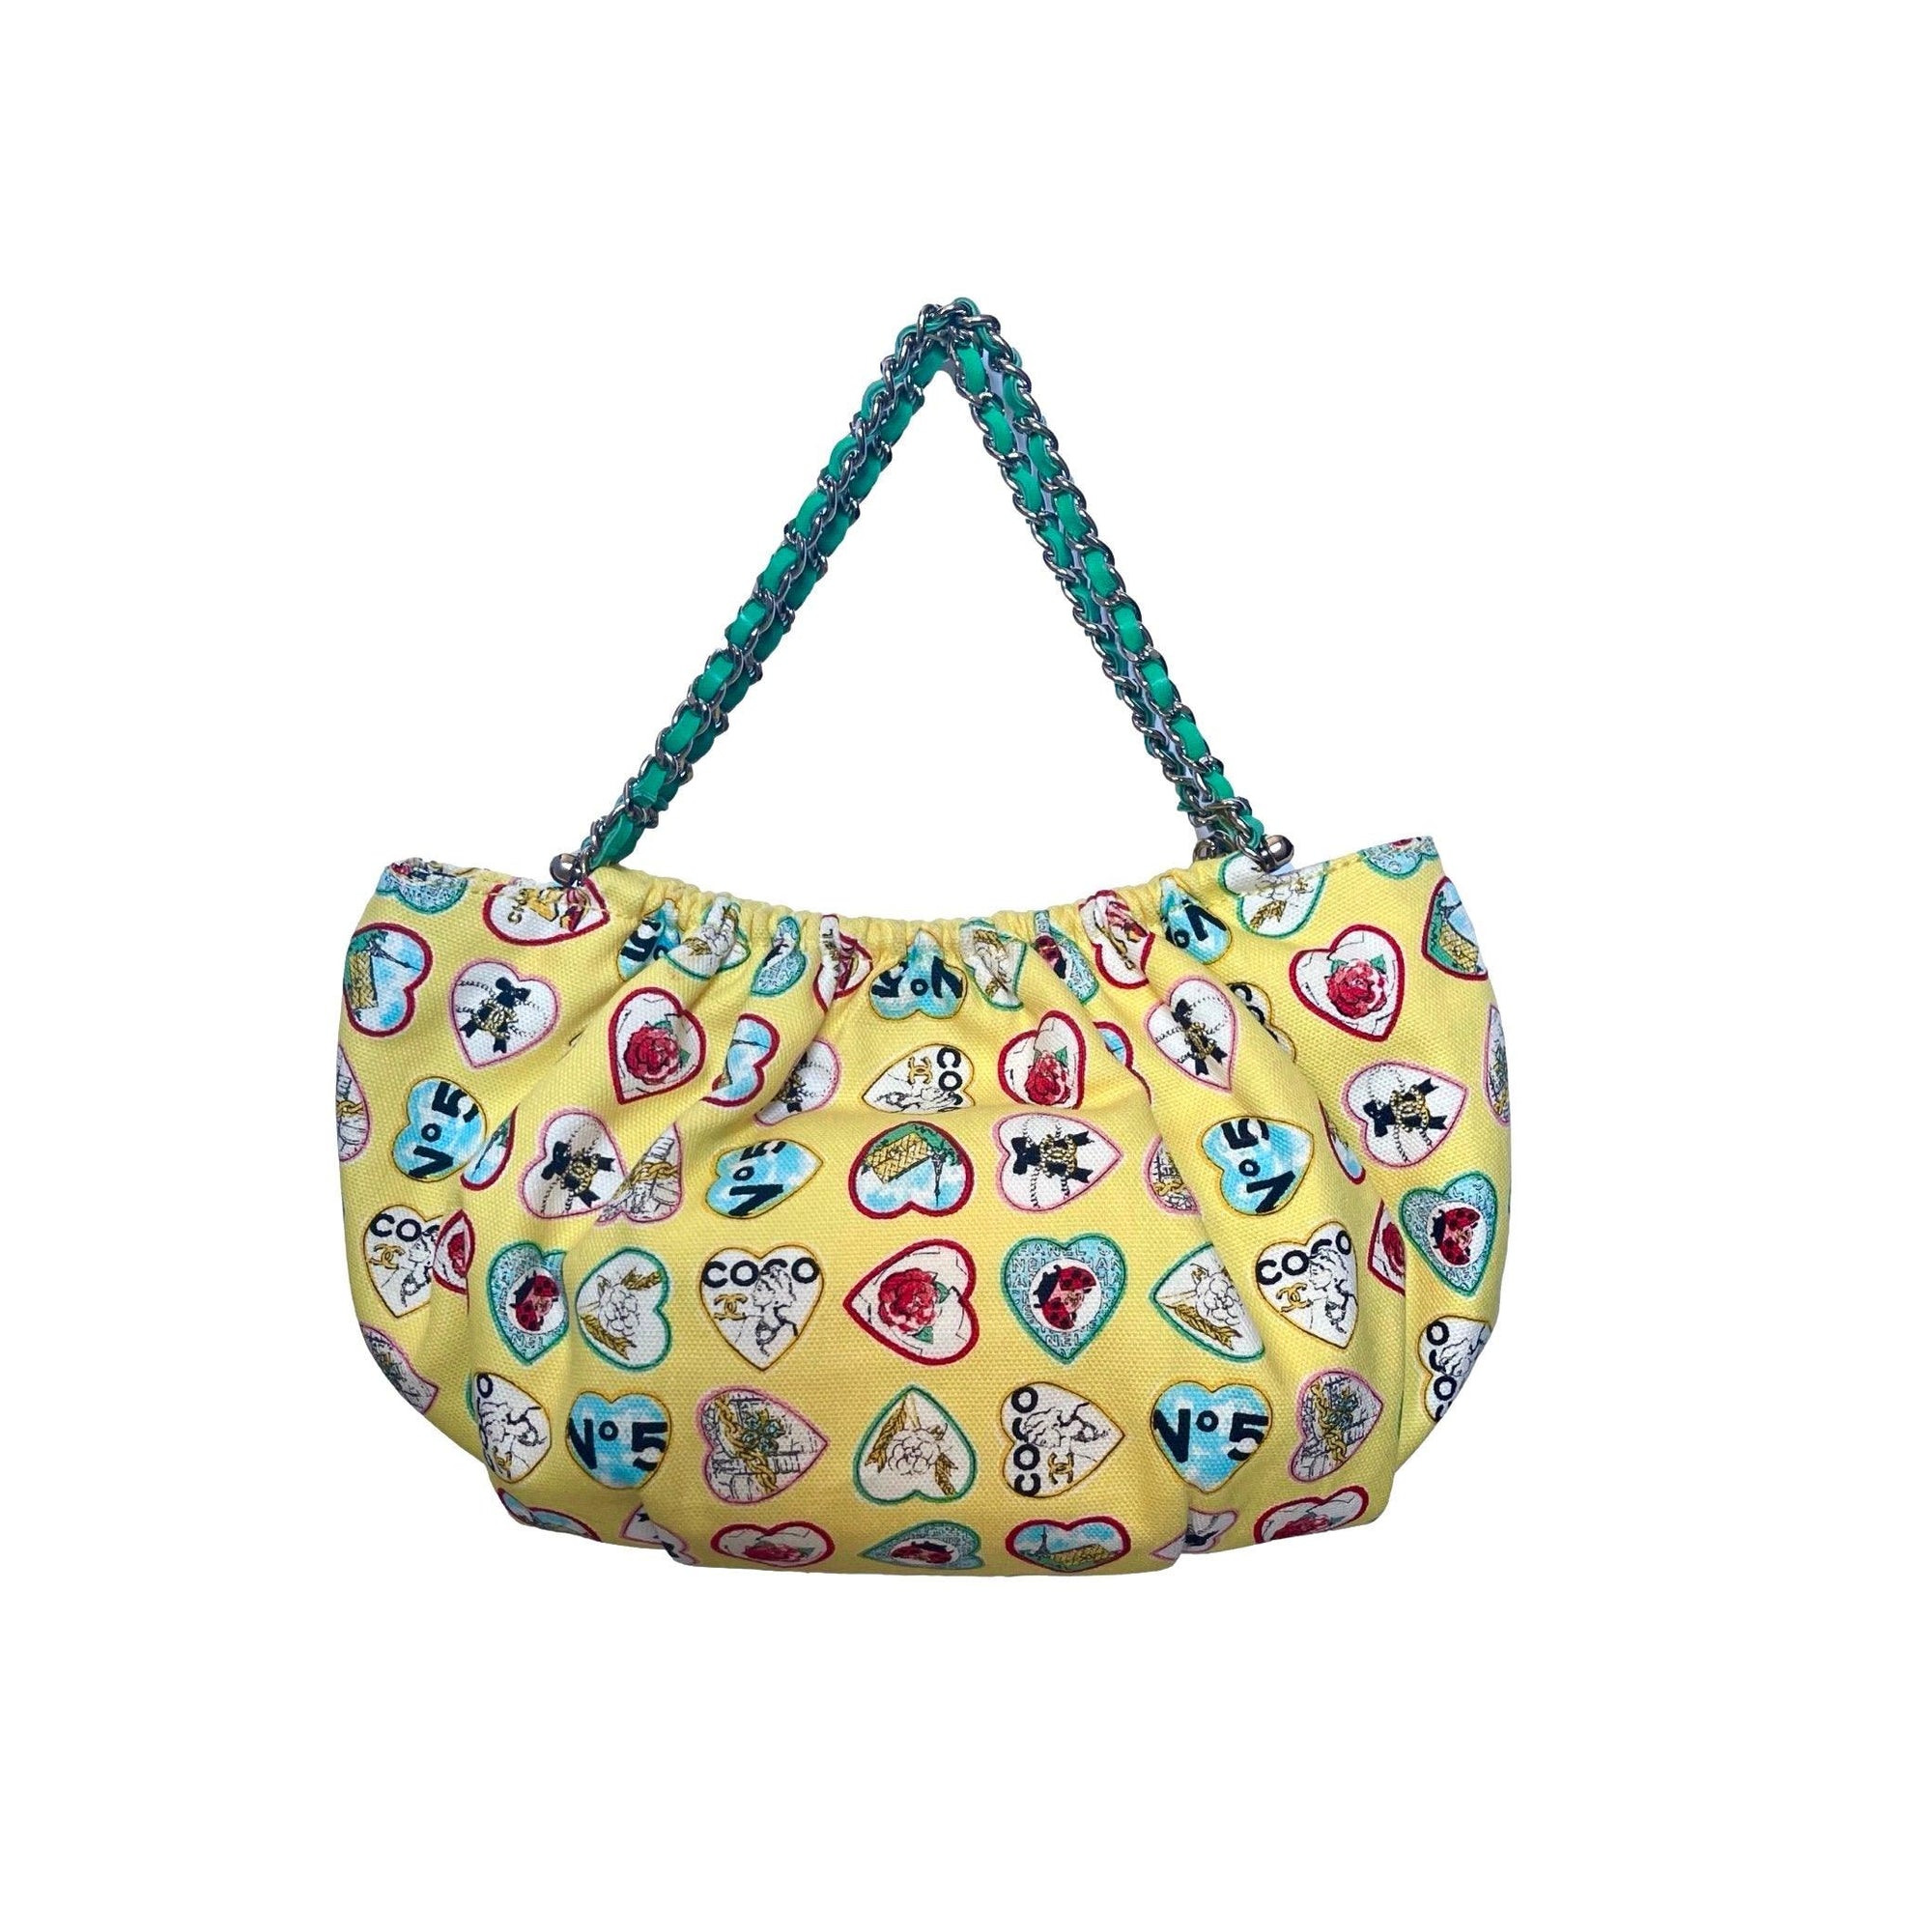 Chanel Yellow Heart Mini Chain Bag - Handbags